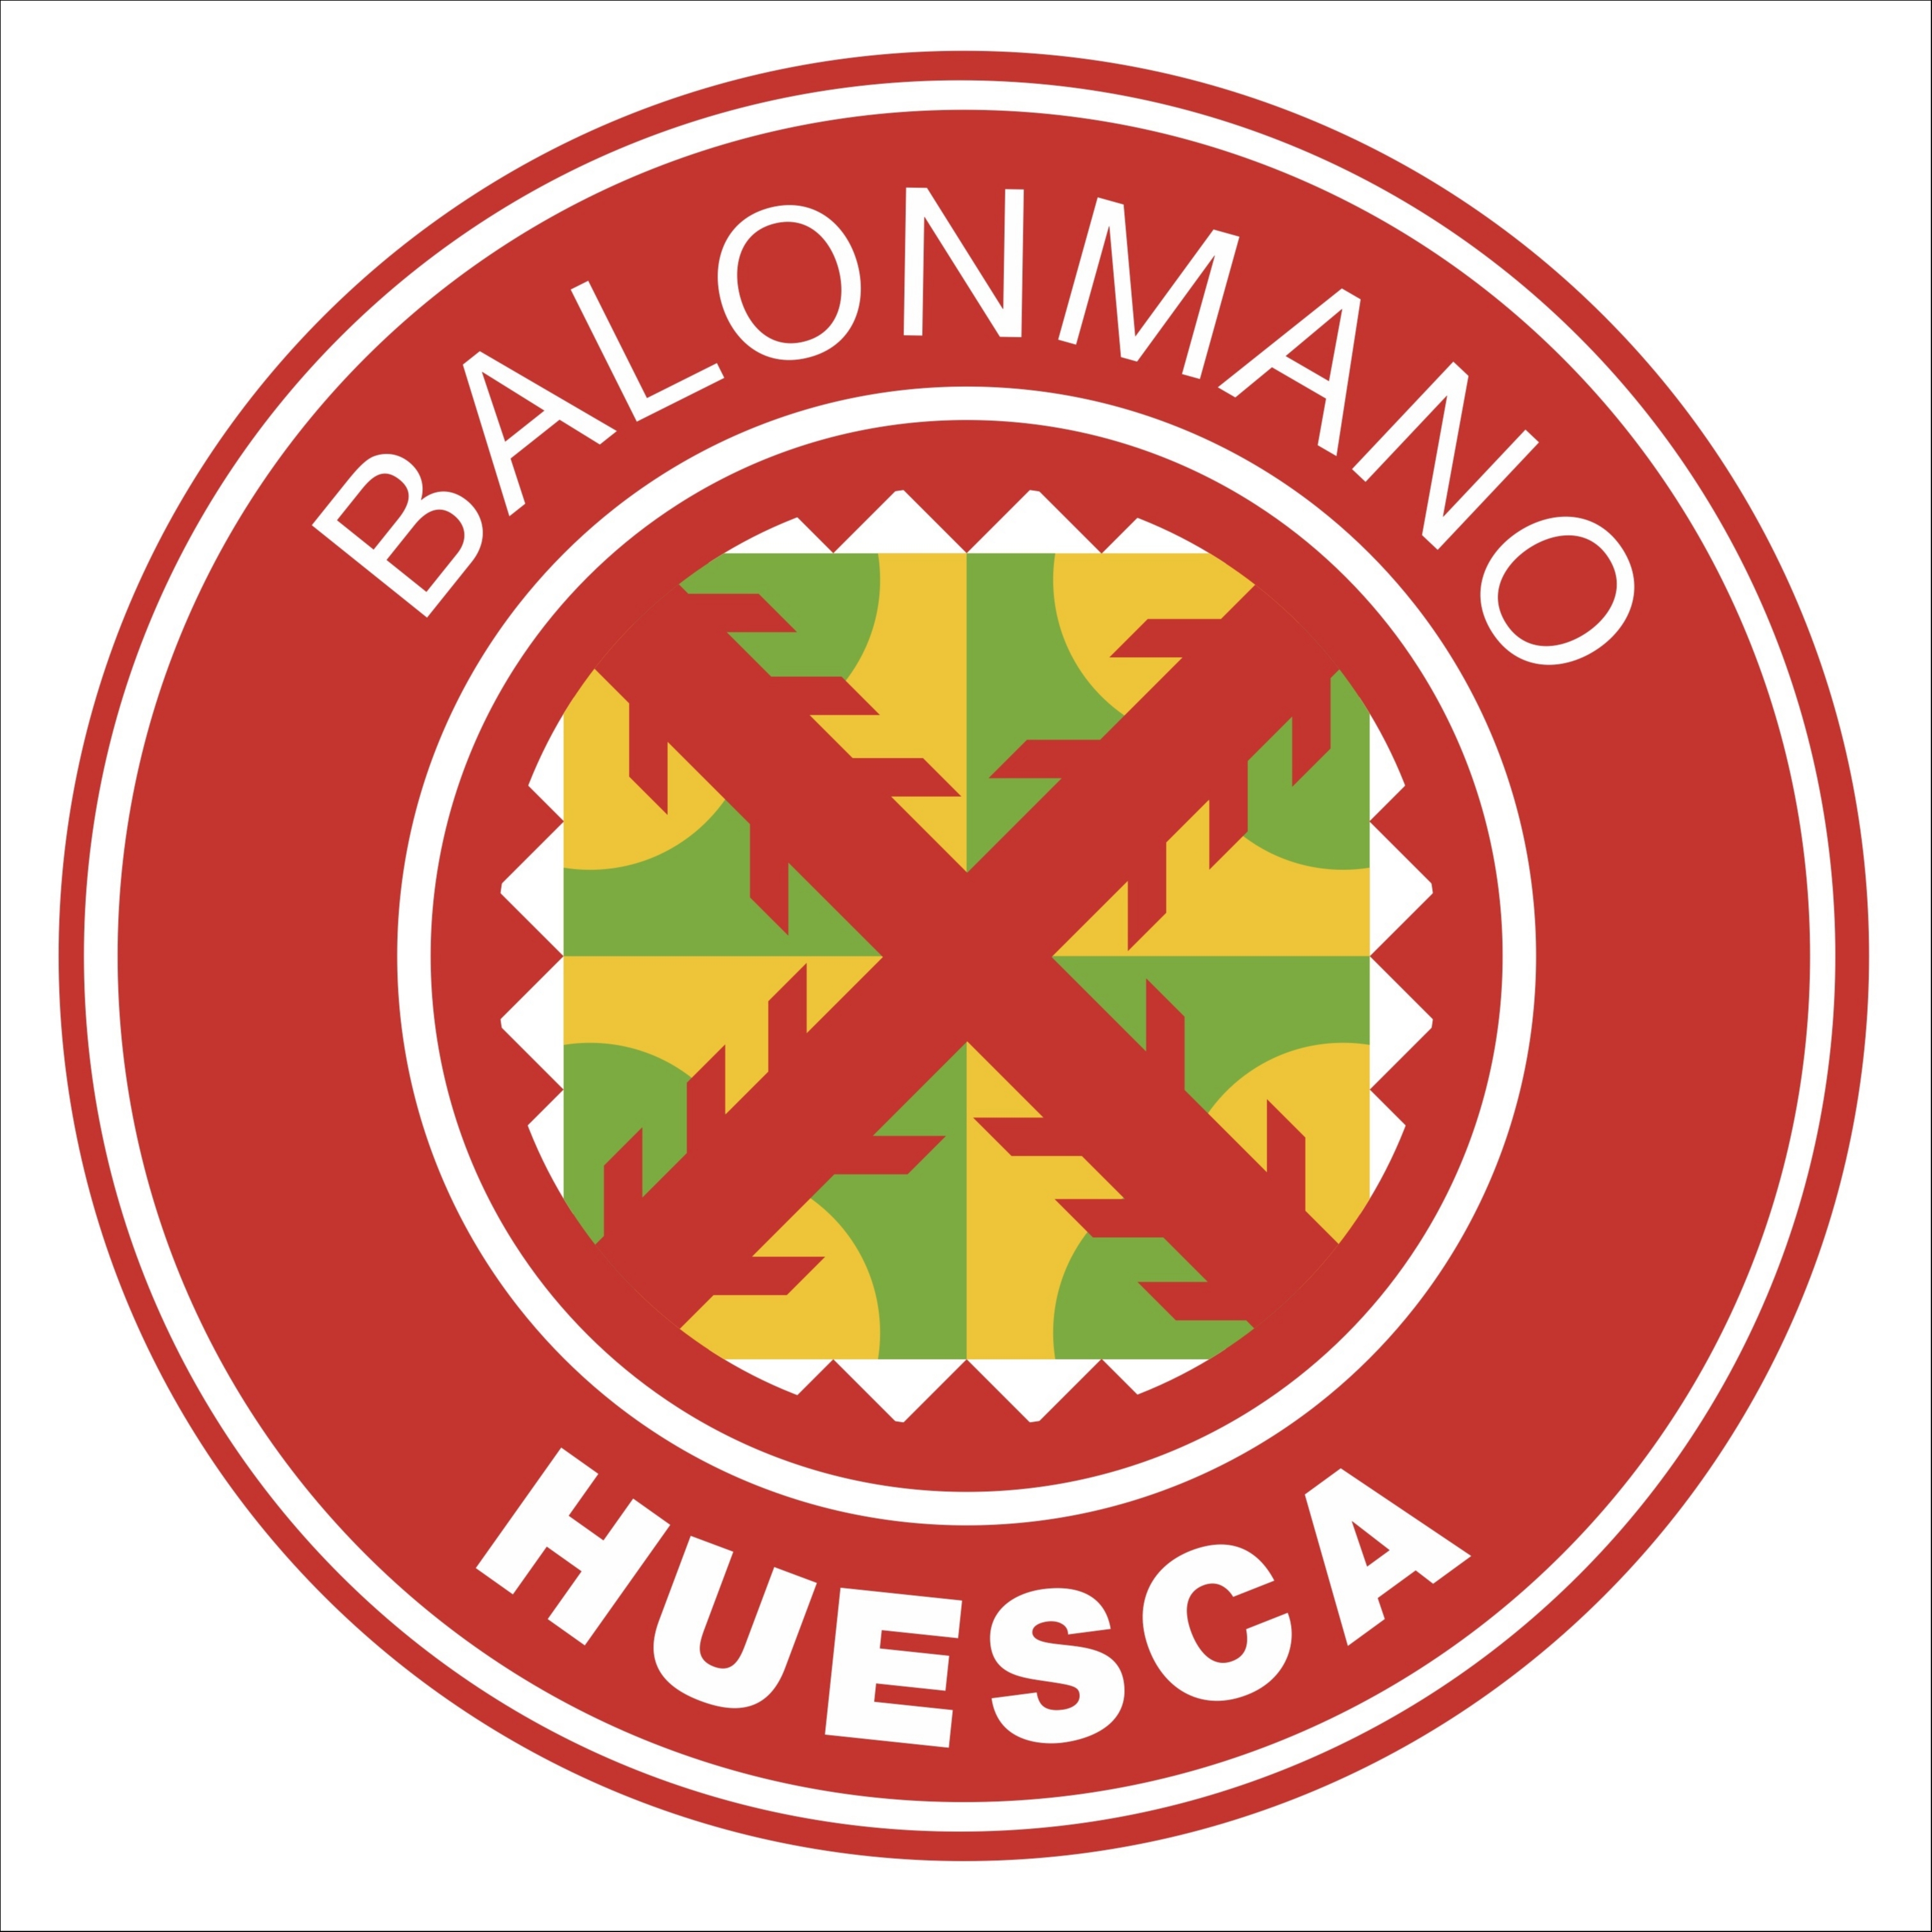 CLUB BALONMANO HUESCA